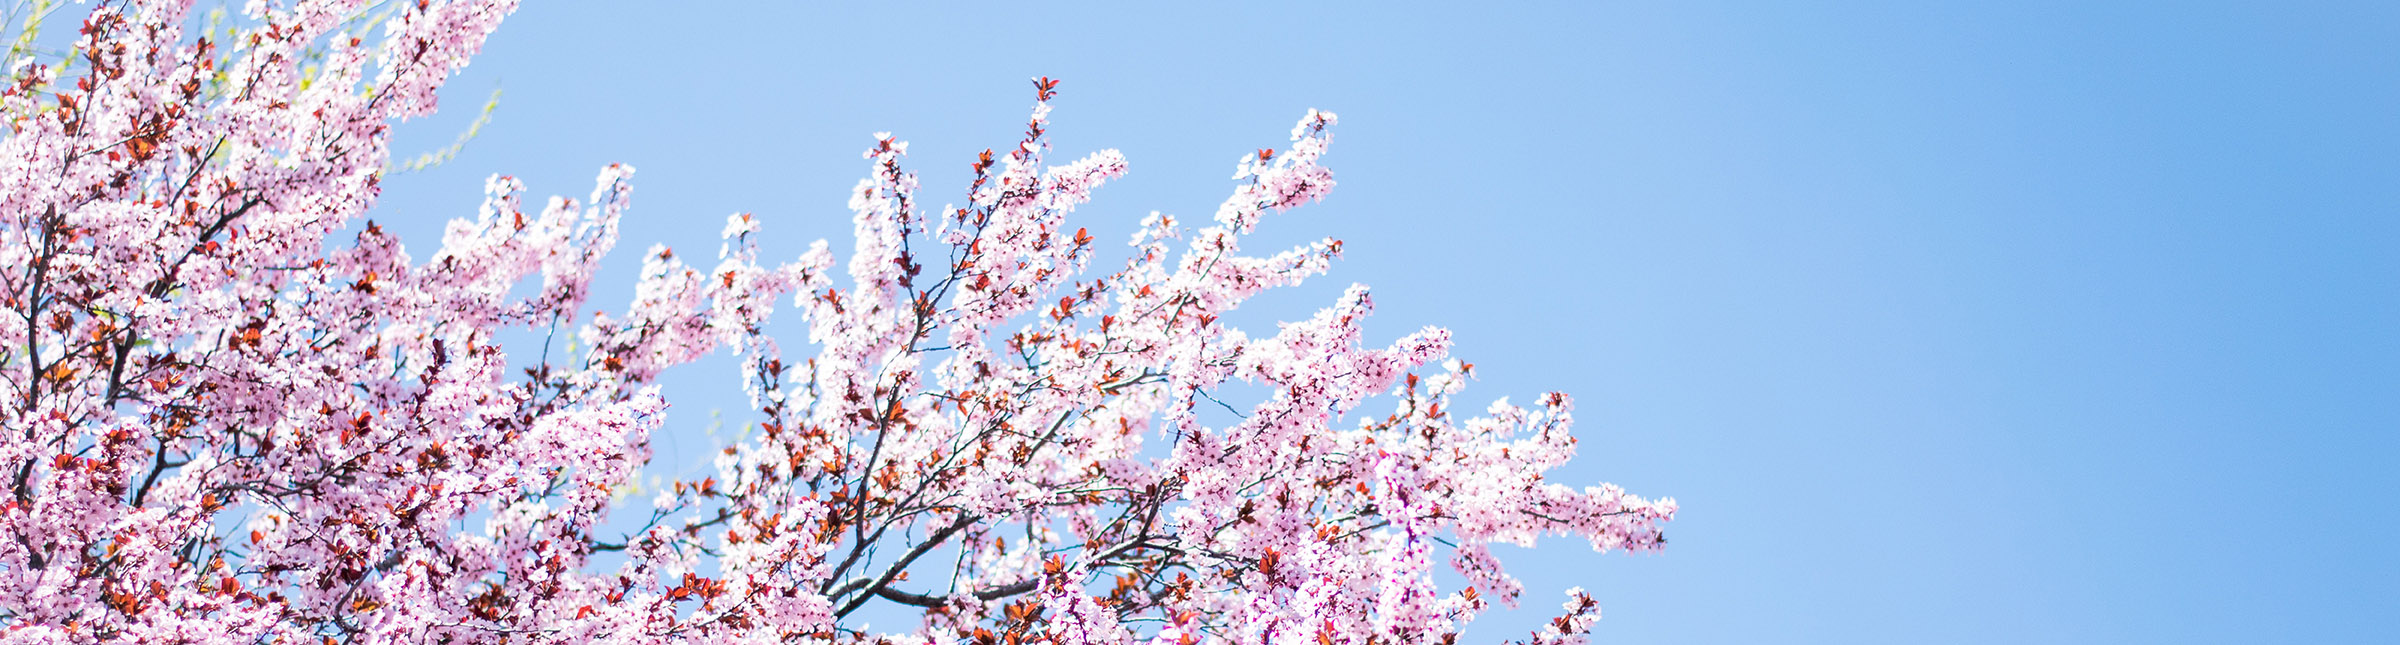 cherry blossom tree against a bright blue sky